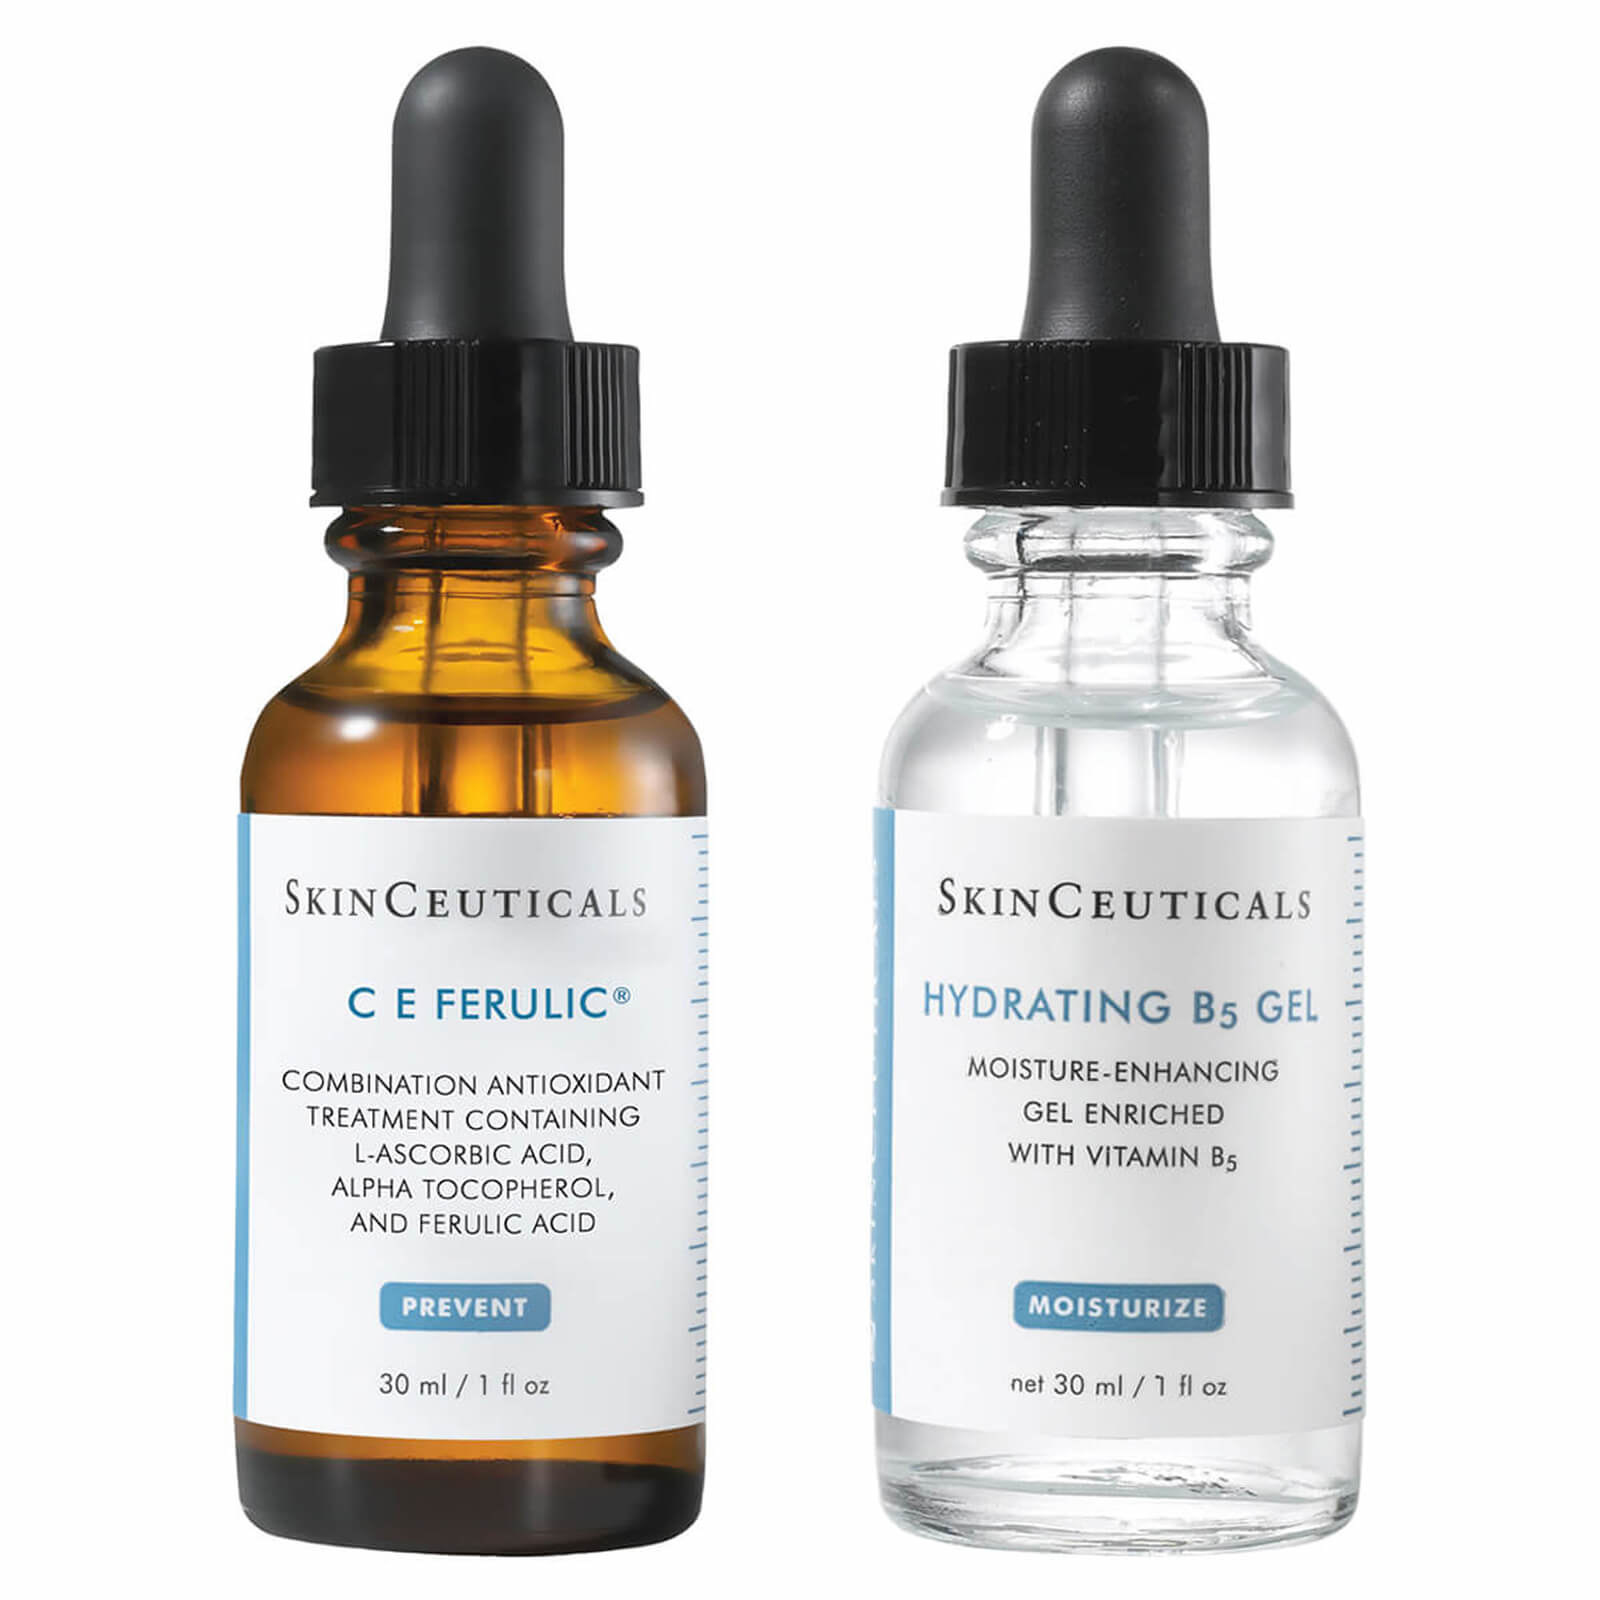 Side by side bottles of C E Ferulic serum and Hydrating B5 Gel moisturizing gel